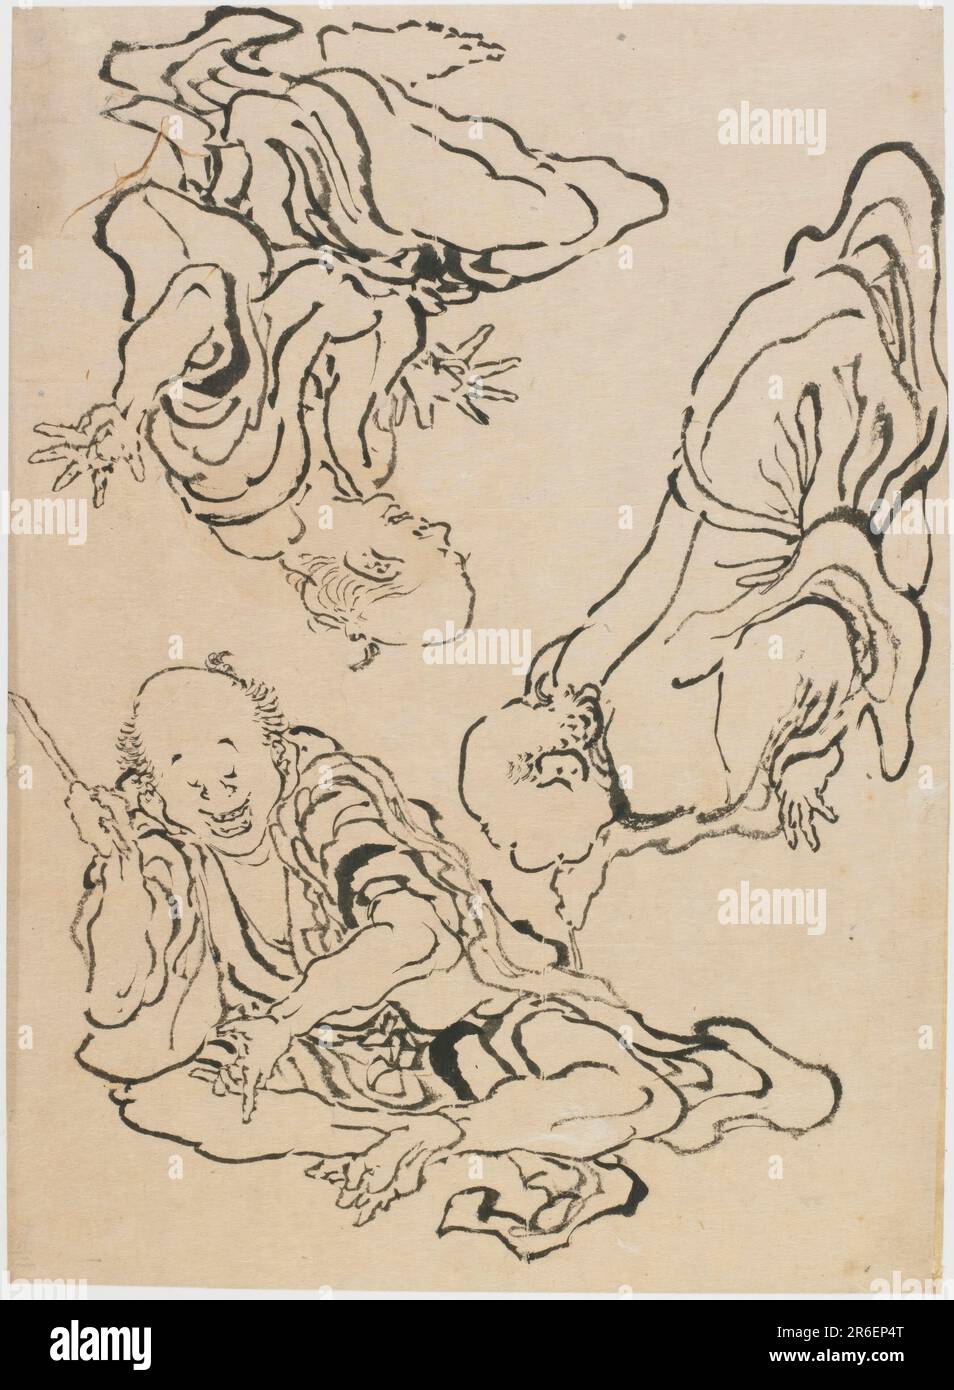 Drei Männer gestikulieren. Tinte auf Papier. Ursprung: Japan. Punkt: Edo Punkt. Datum: 1615-1868. Museum: Freer Gallery of Art und Arthur M. Sackler Gallery. Stockfoto